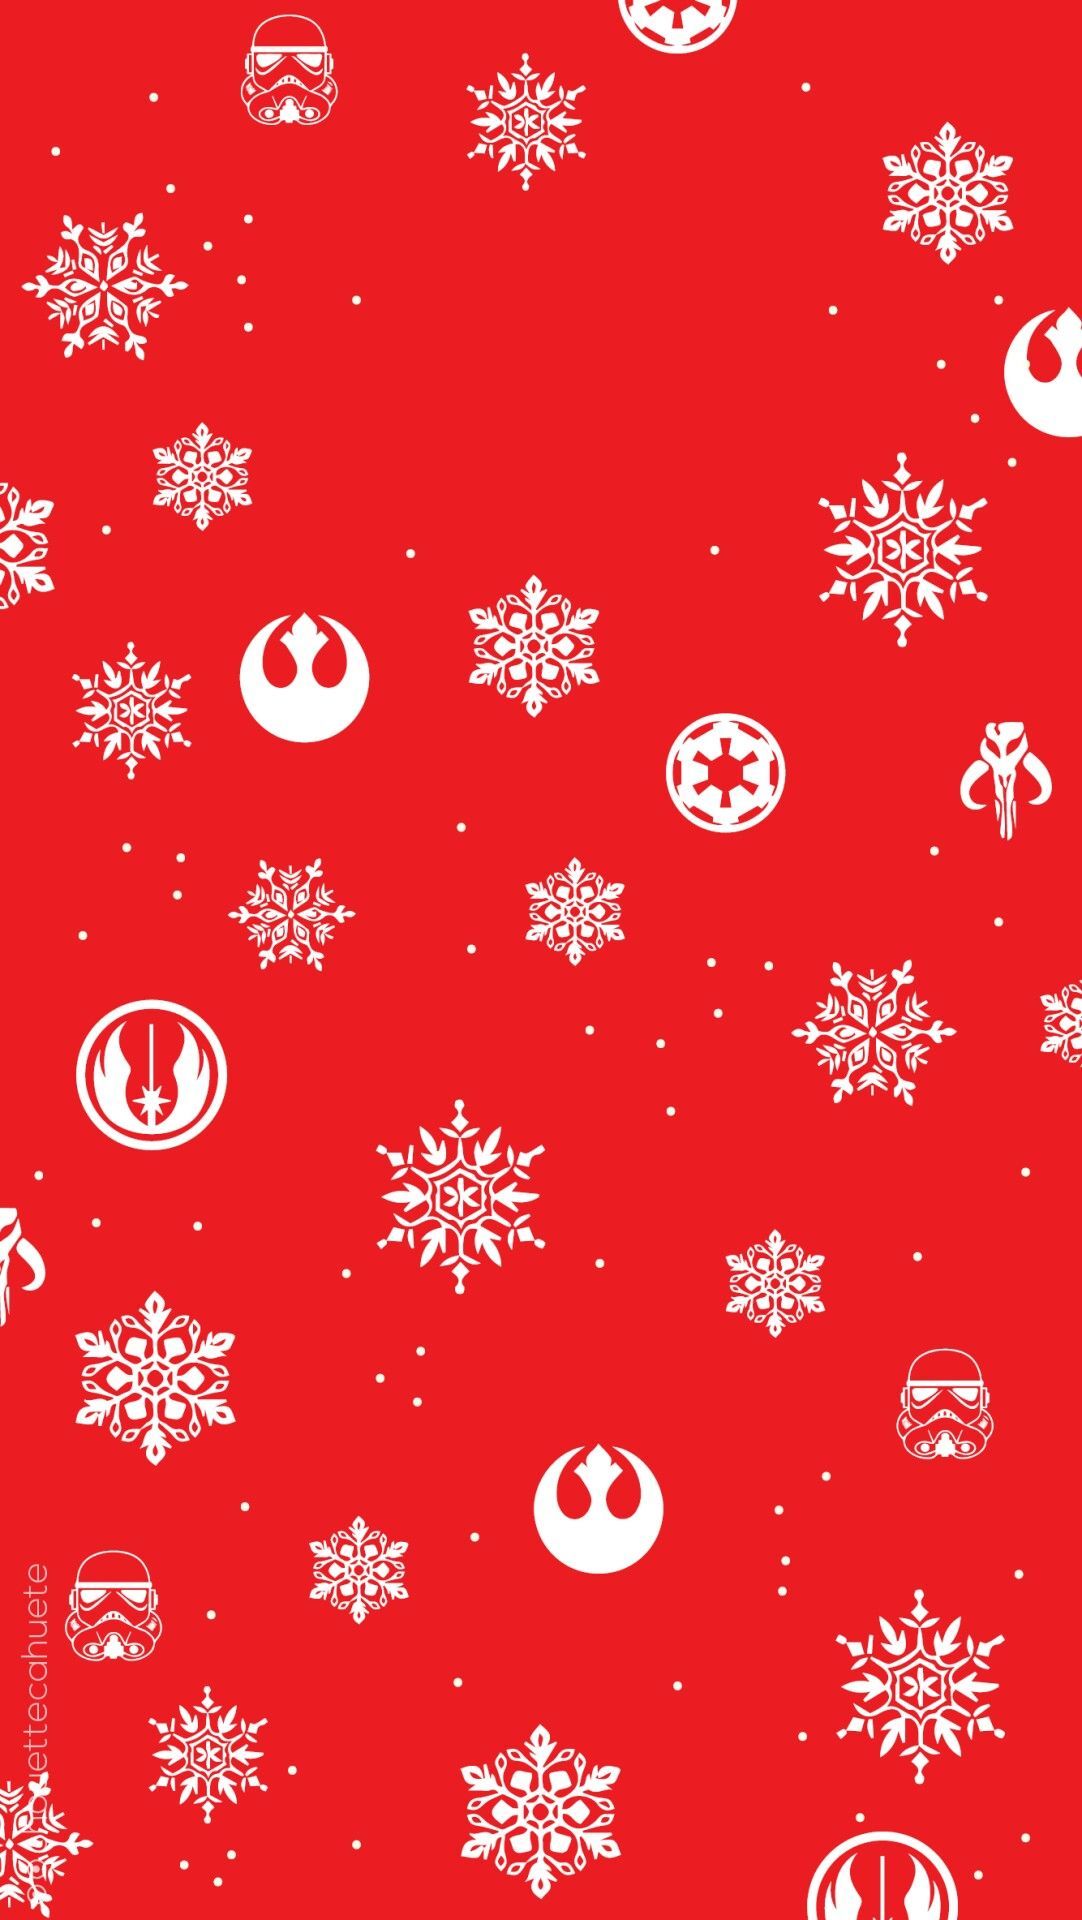 Christmas star wars. Star wars art, Star wars wallpaper, Star wars christmas